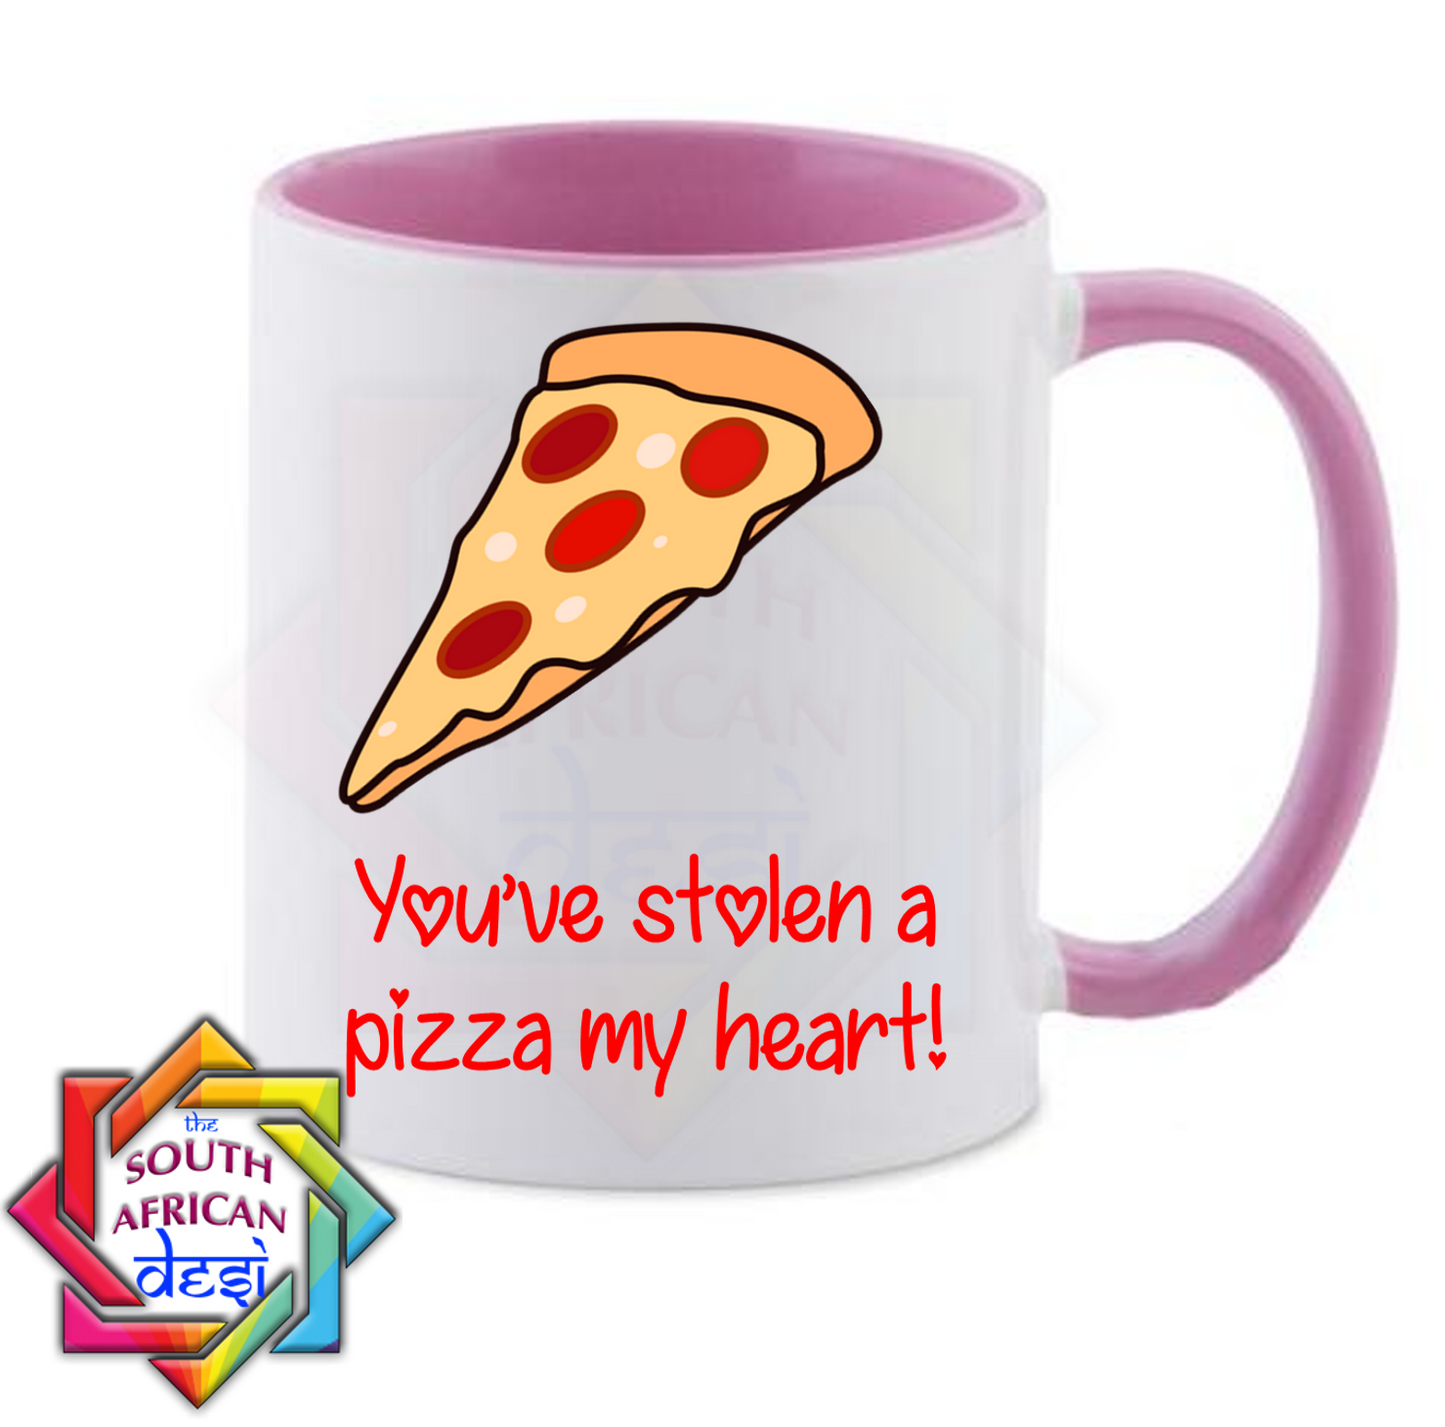 YOU'VE STOLEN A "PIZZA" MY HEART! | VALENTINES DAY MUG